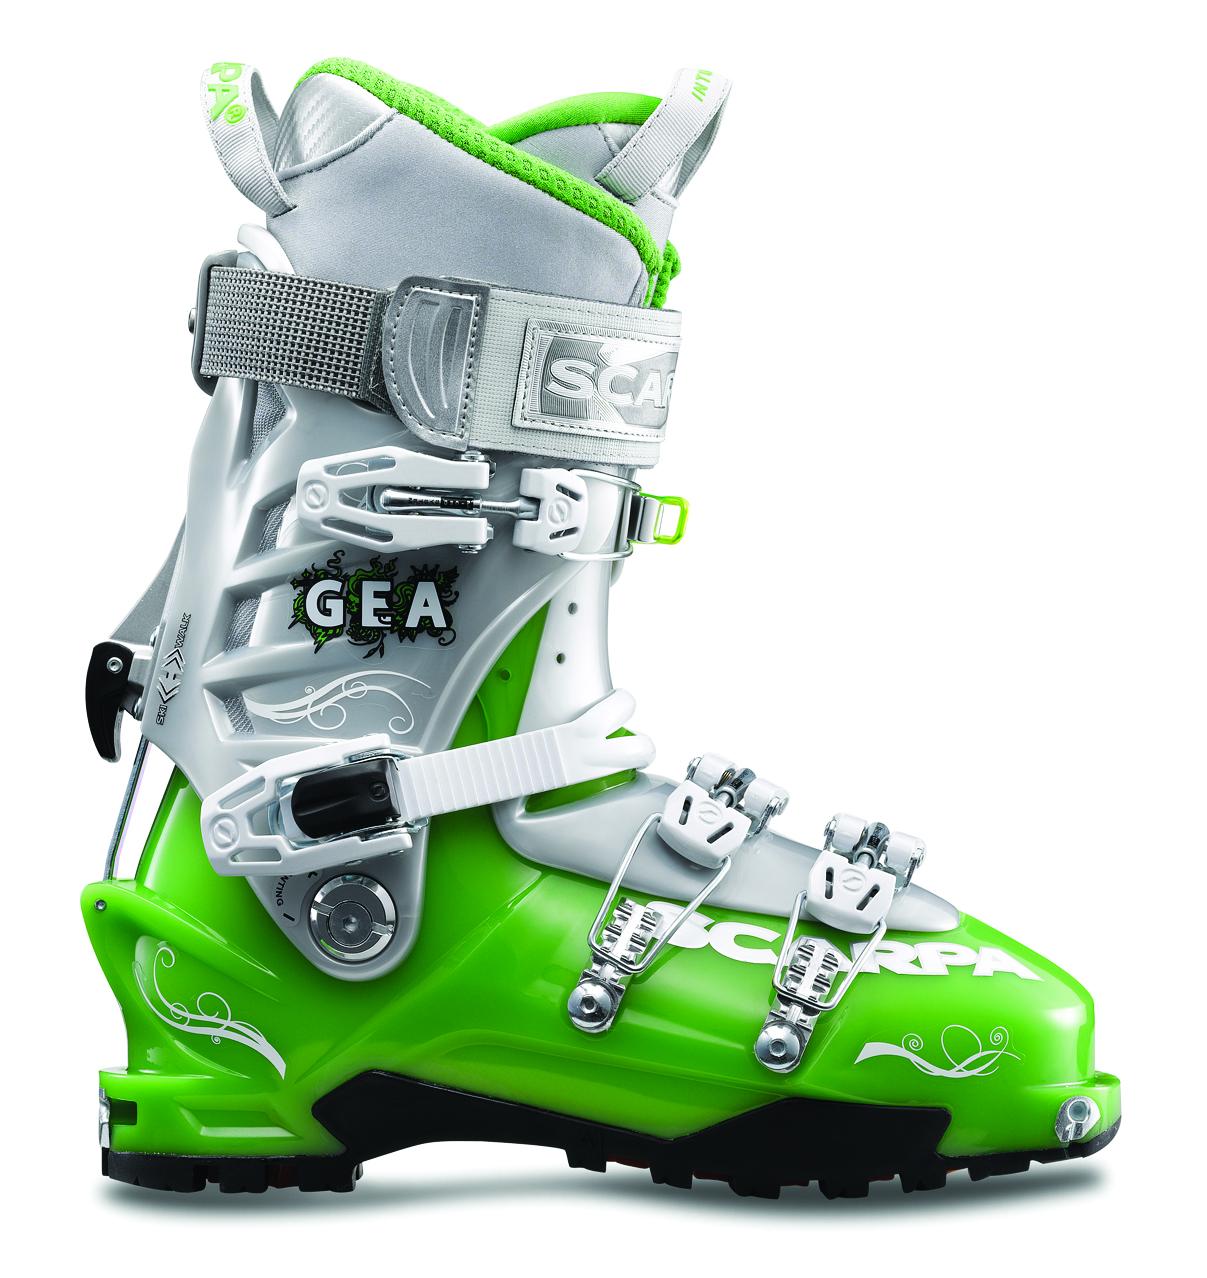 297 mm ski boot size